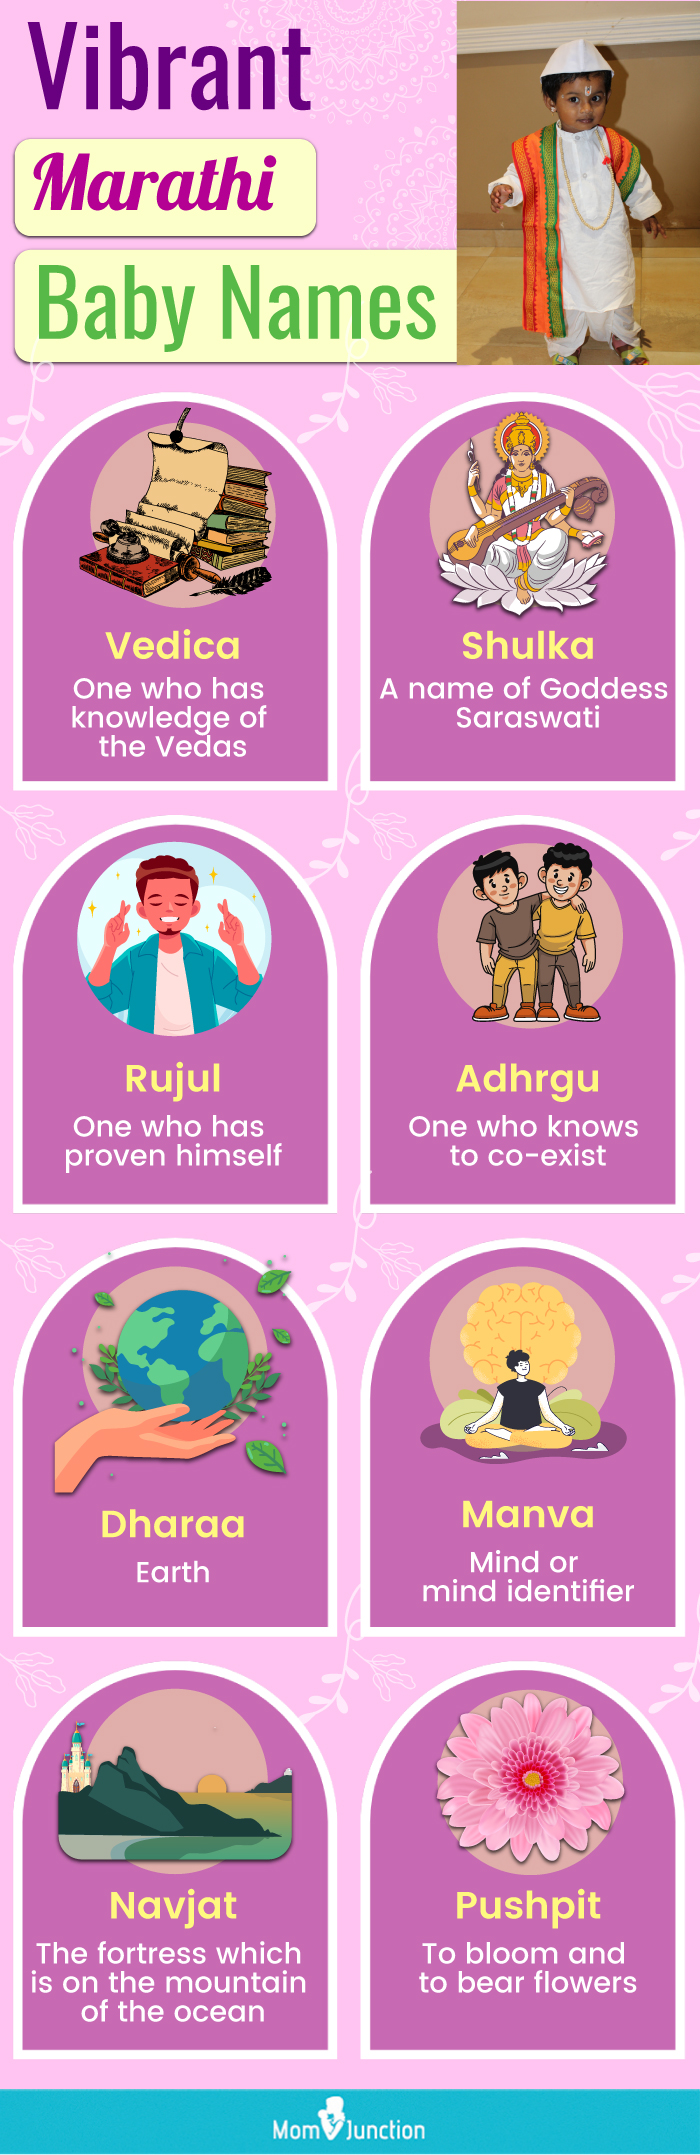 vibrant marathi baby names (infographic)